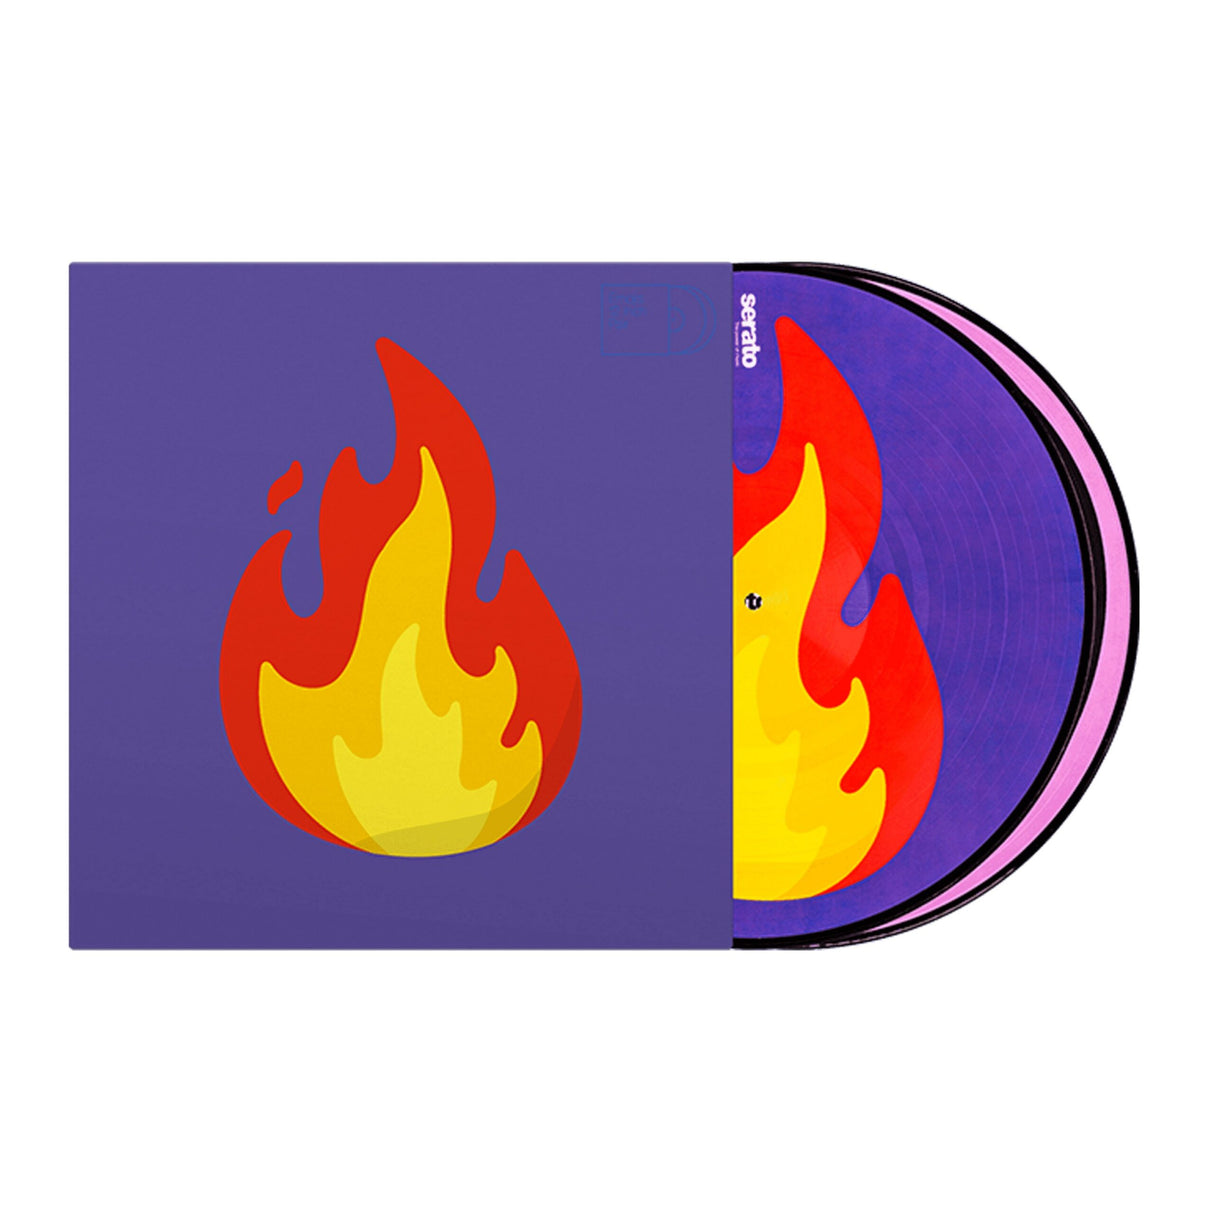 Serato SCV-PS-EMJ-2 12-Inch Emoji Series #2 Flame Vinyl, Pair